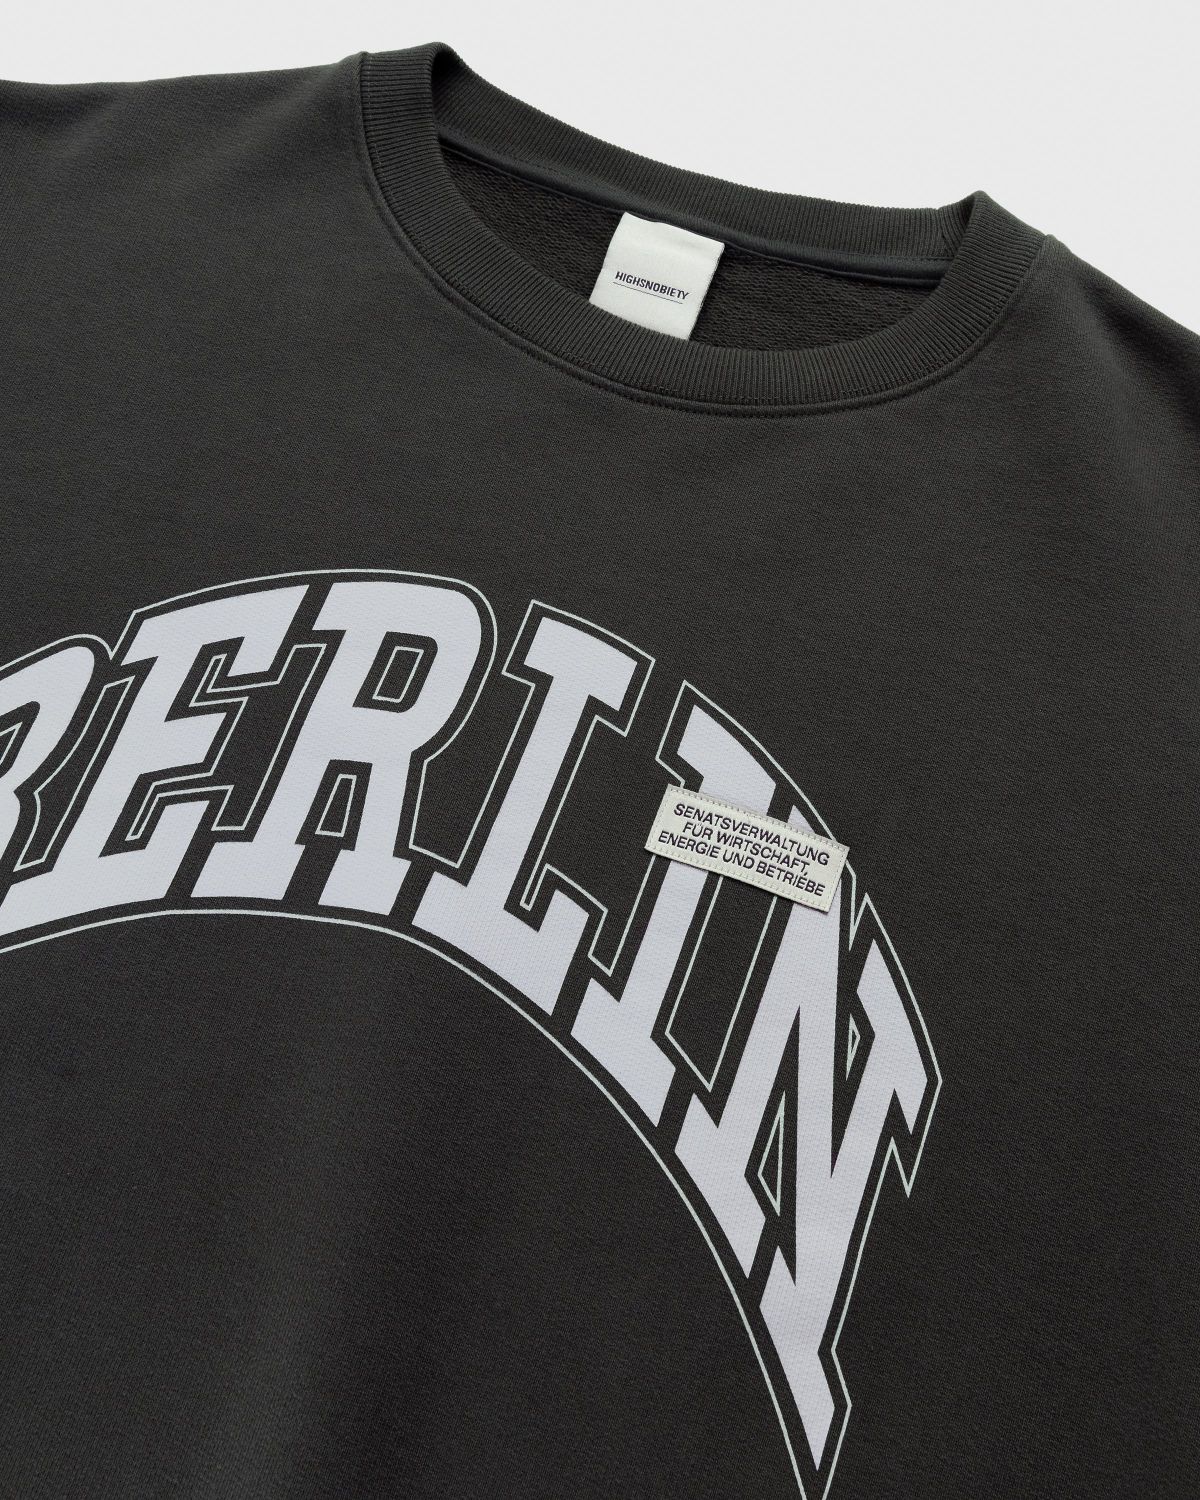 Highsnobiety – BERLIN, BERLIN 3 Crewneck Black - Sweatshirts - Black - Image 5